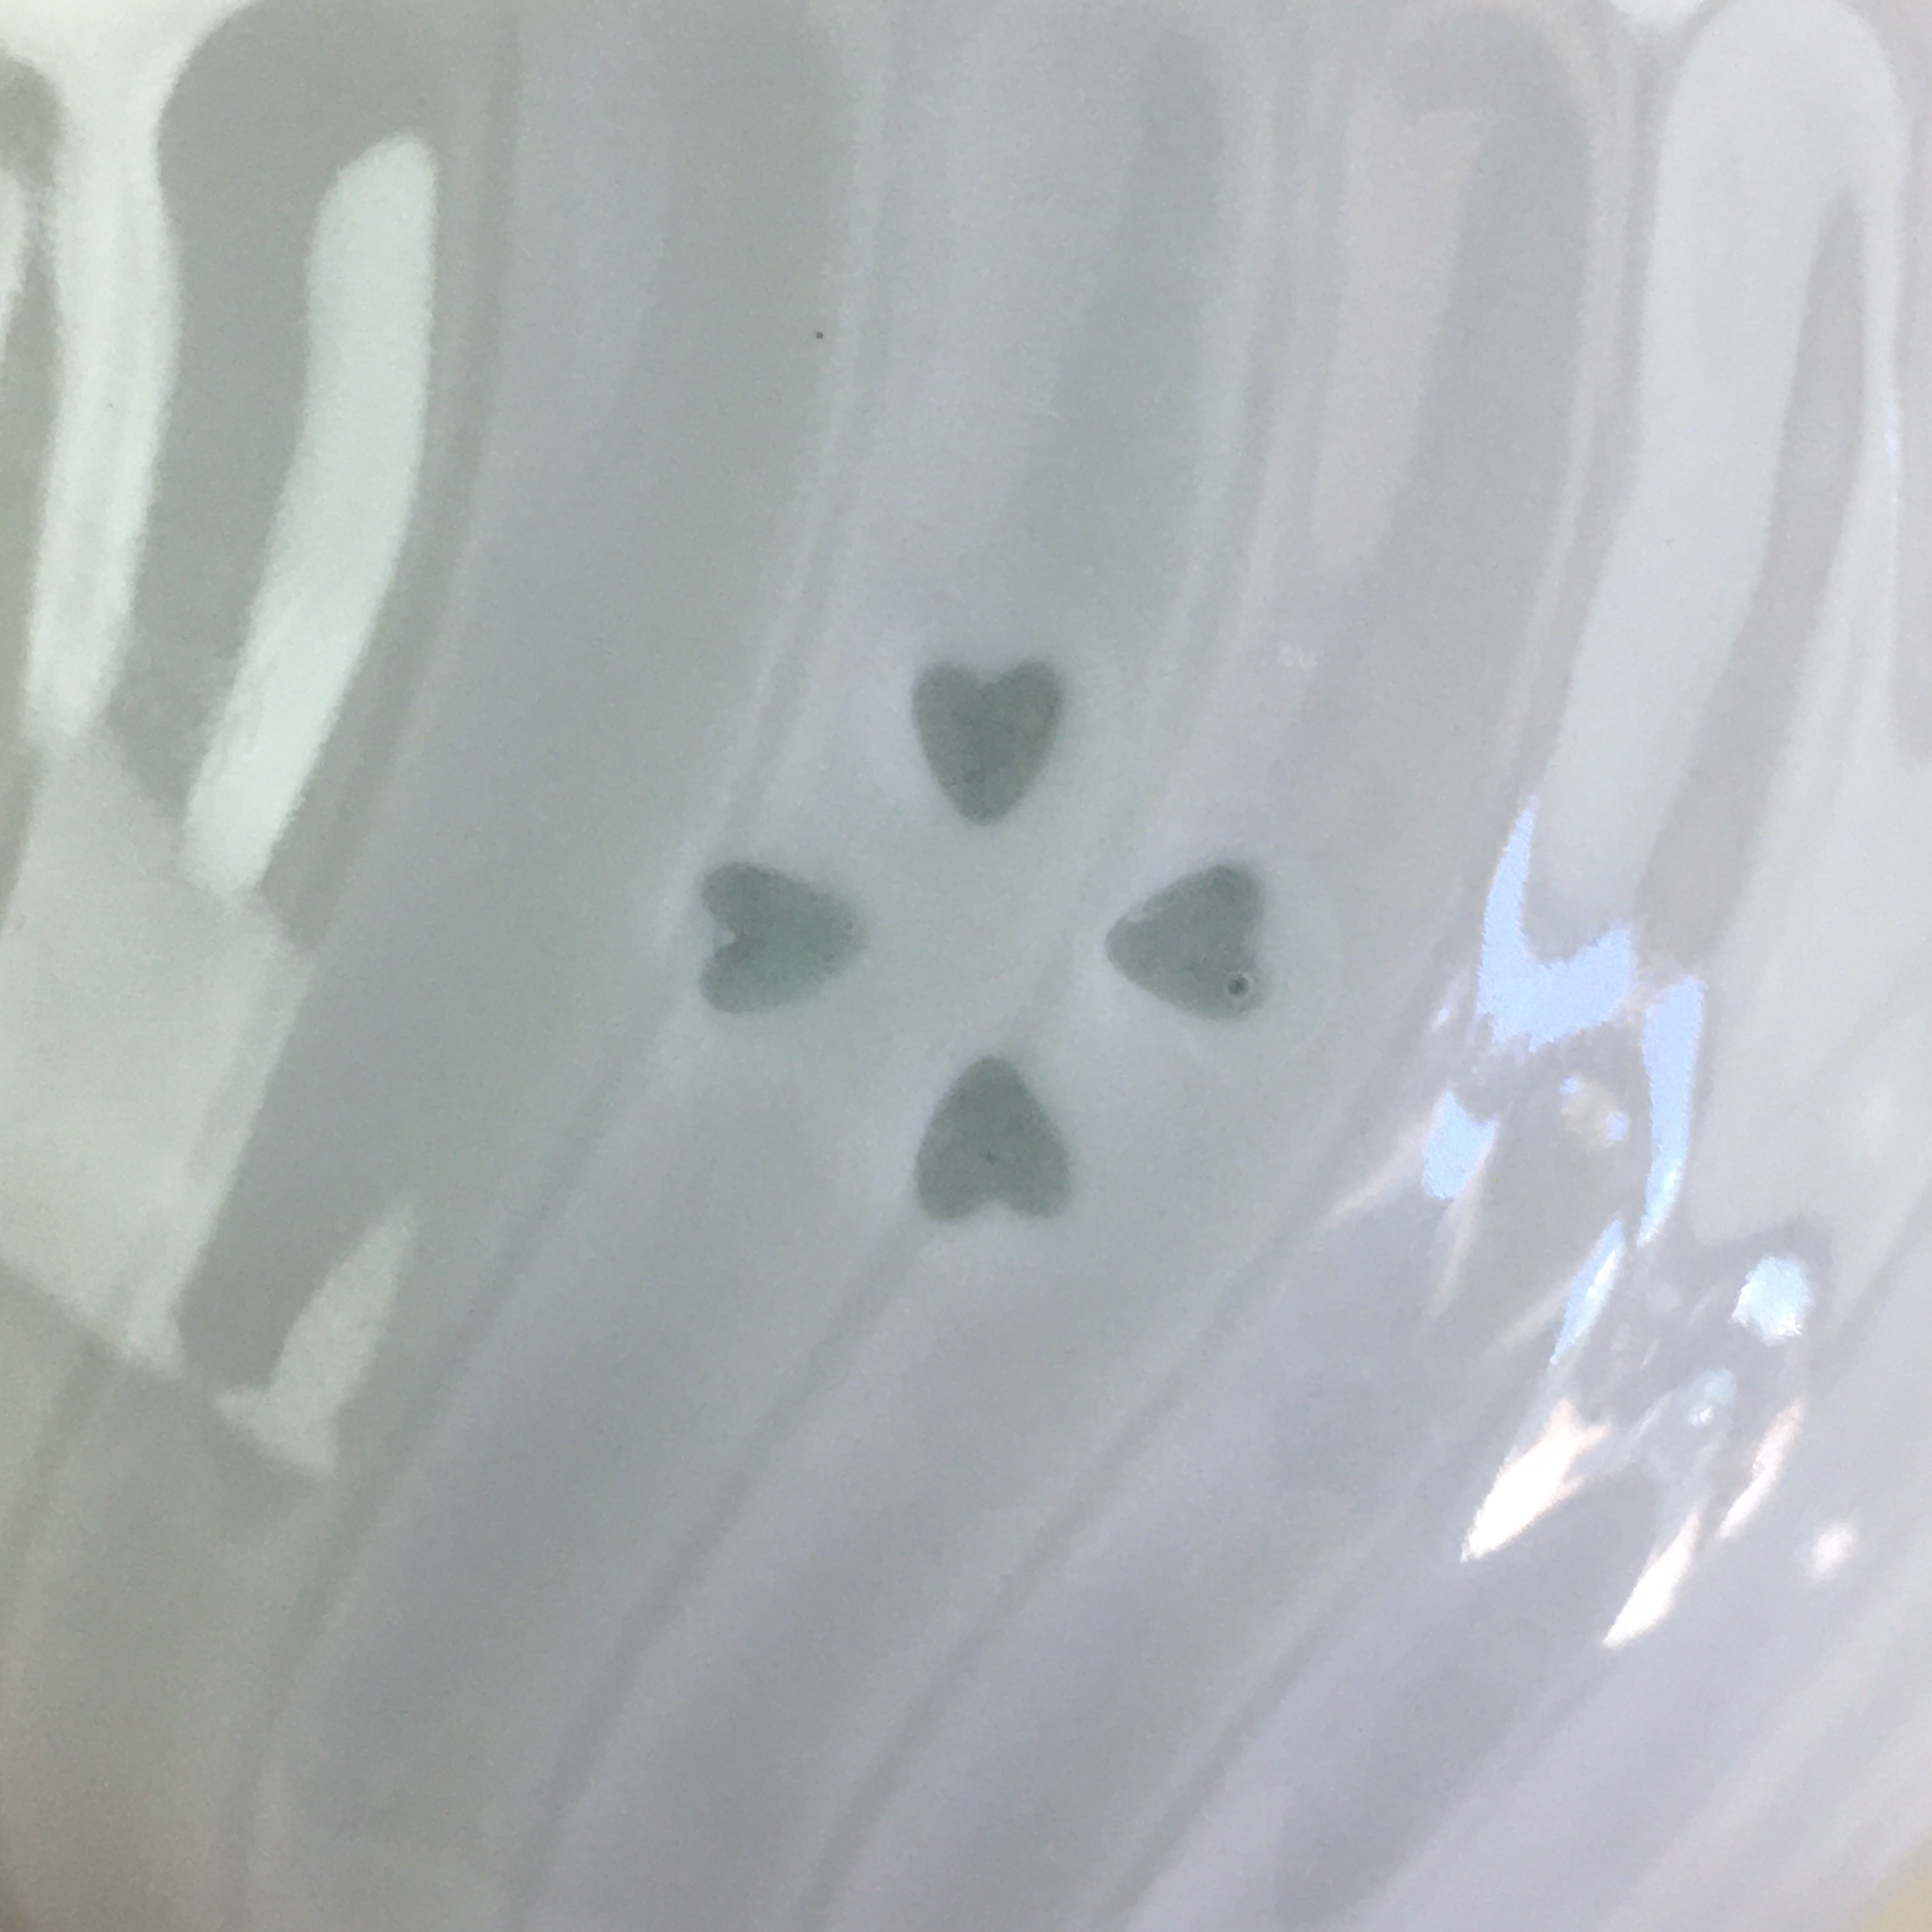 Japanese Porcelain Arita ware Teacup Vtg Yunomi Sencha White TC296